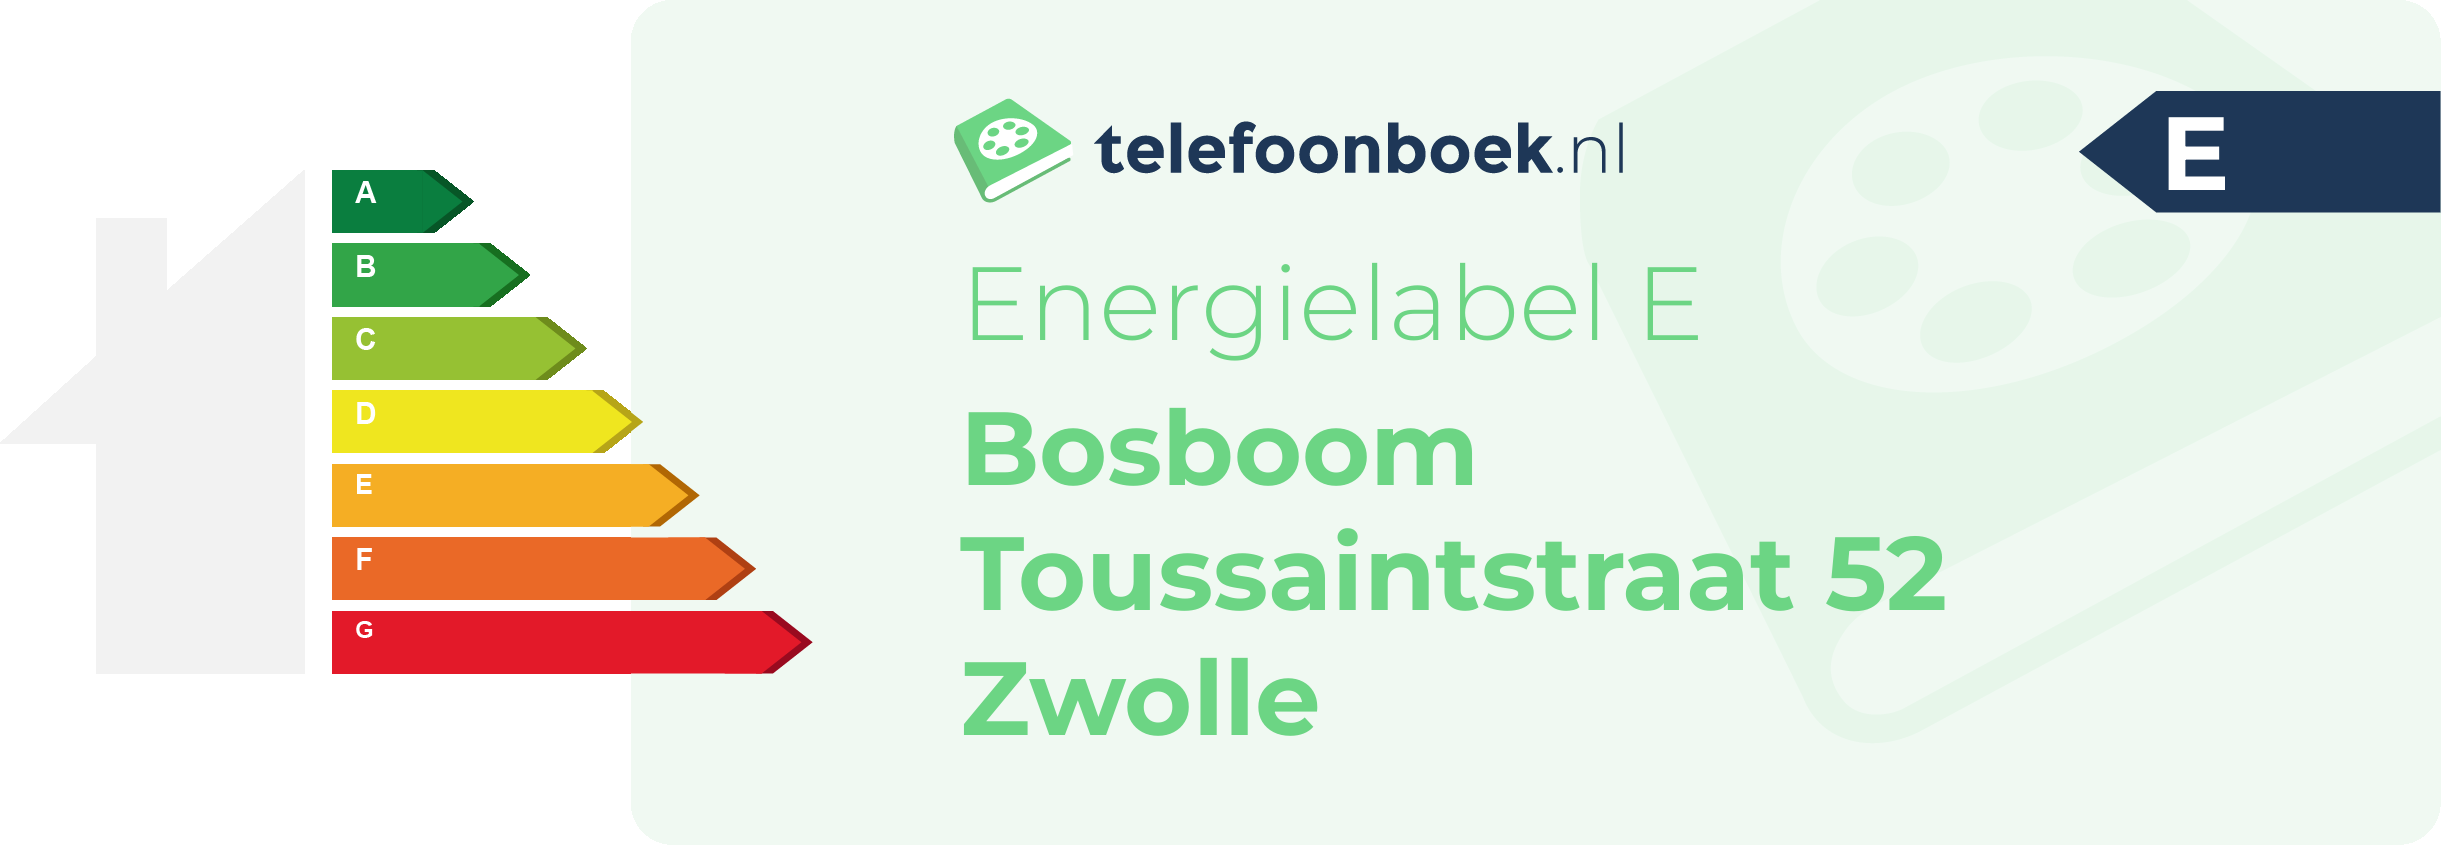 Energielabel Bosboom Toussaintstraat 52 Zwolle